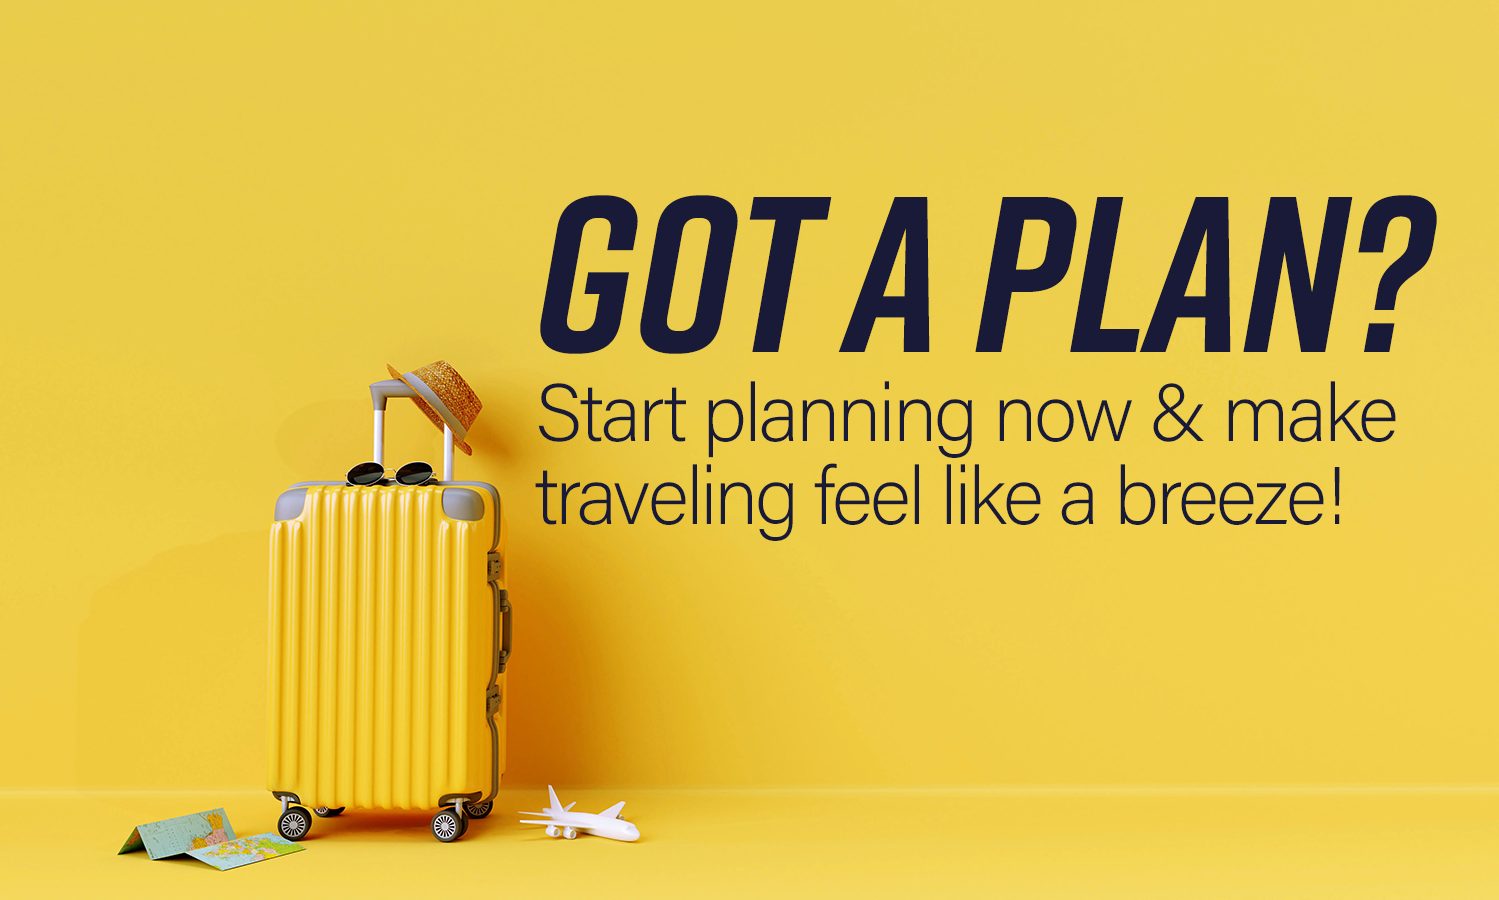 Got a plan? Start planning now & make traveling feel like a breeze